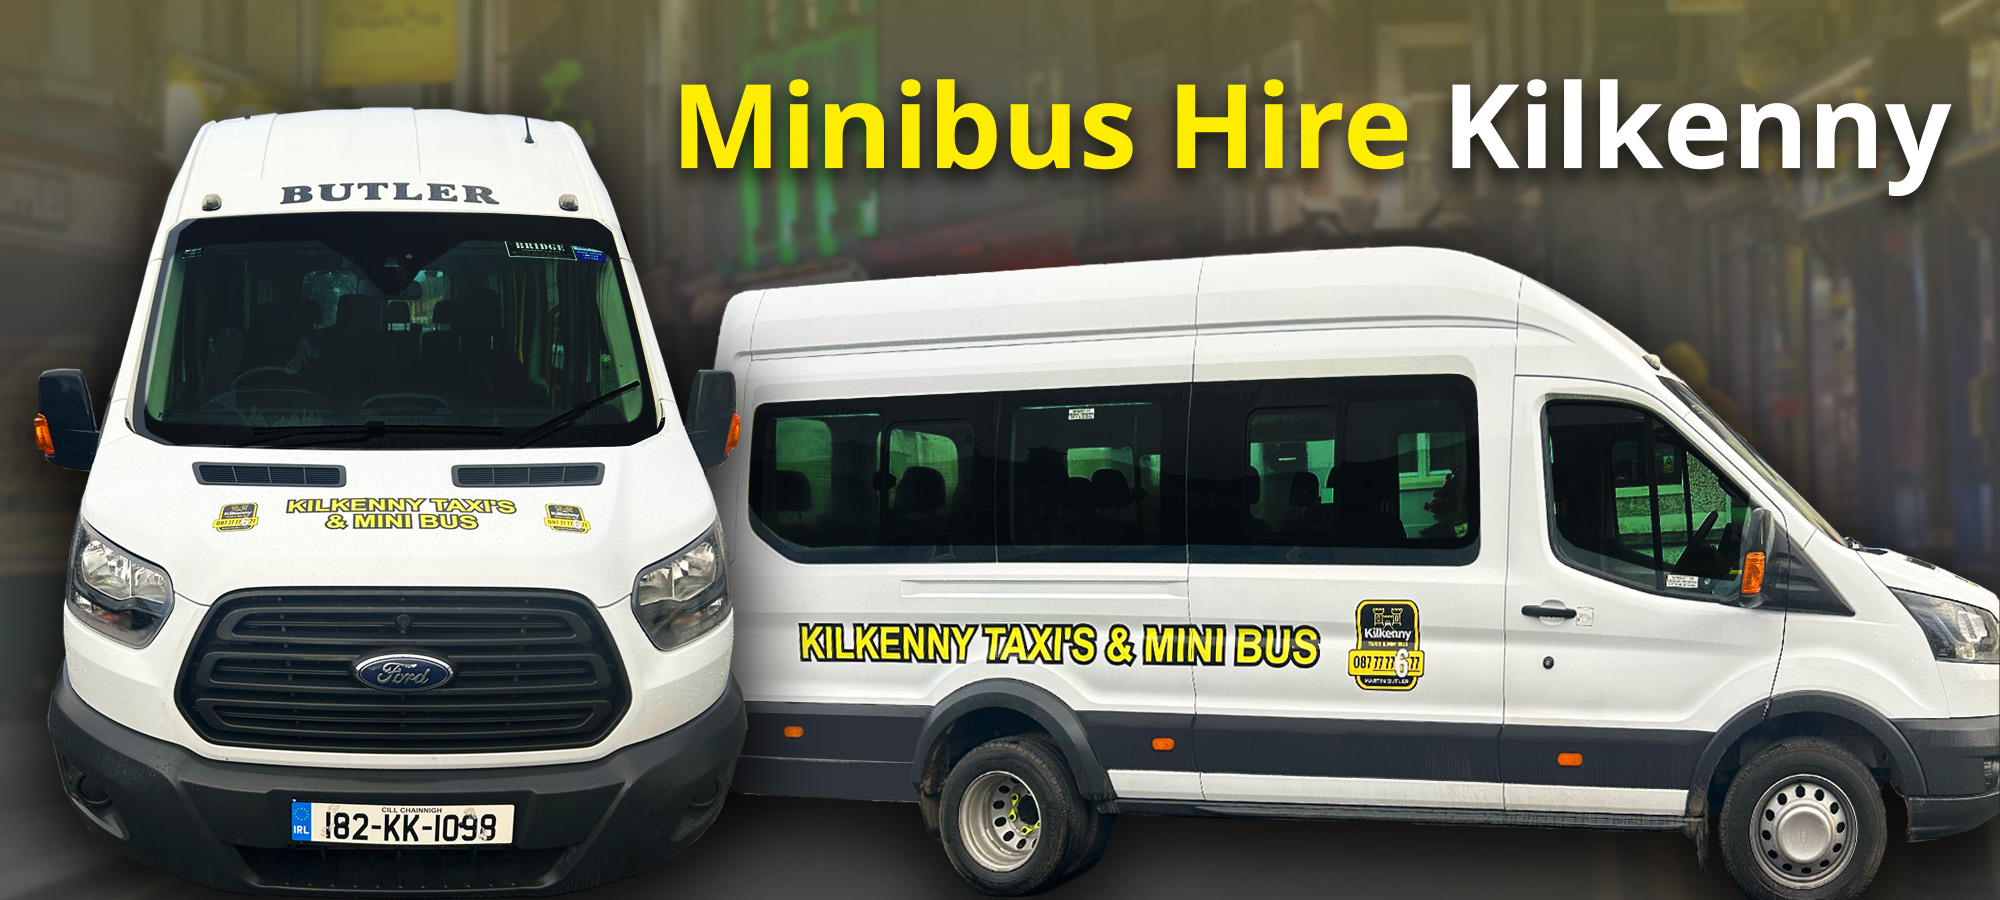 mini bus hire kilkenny